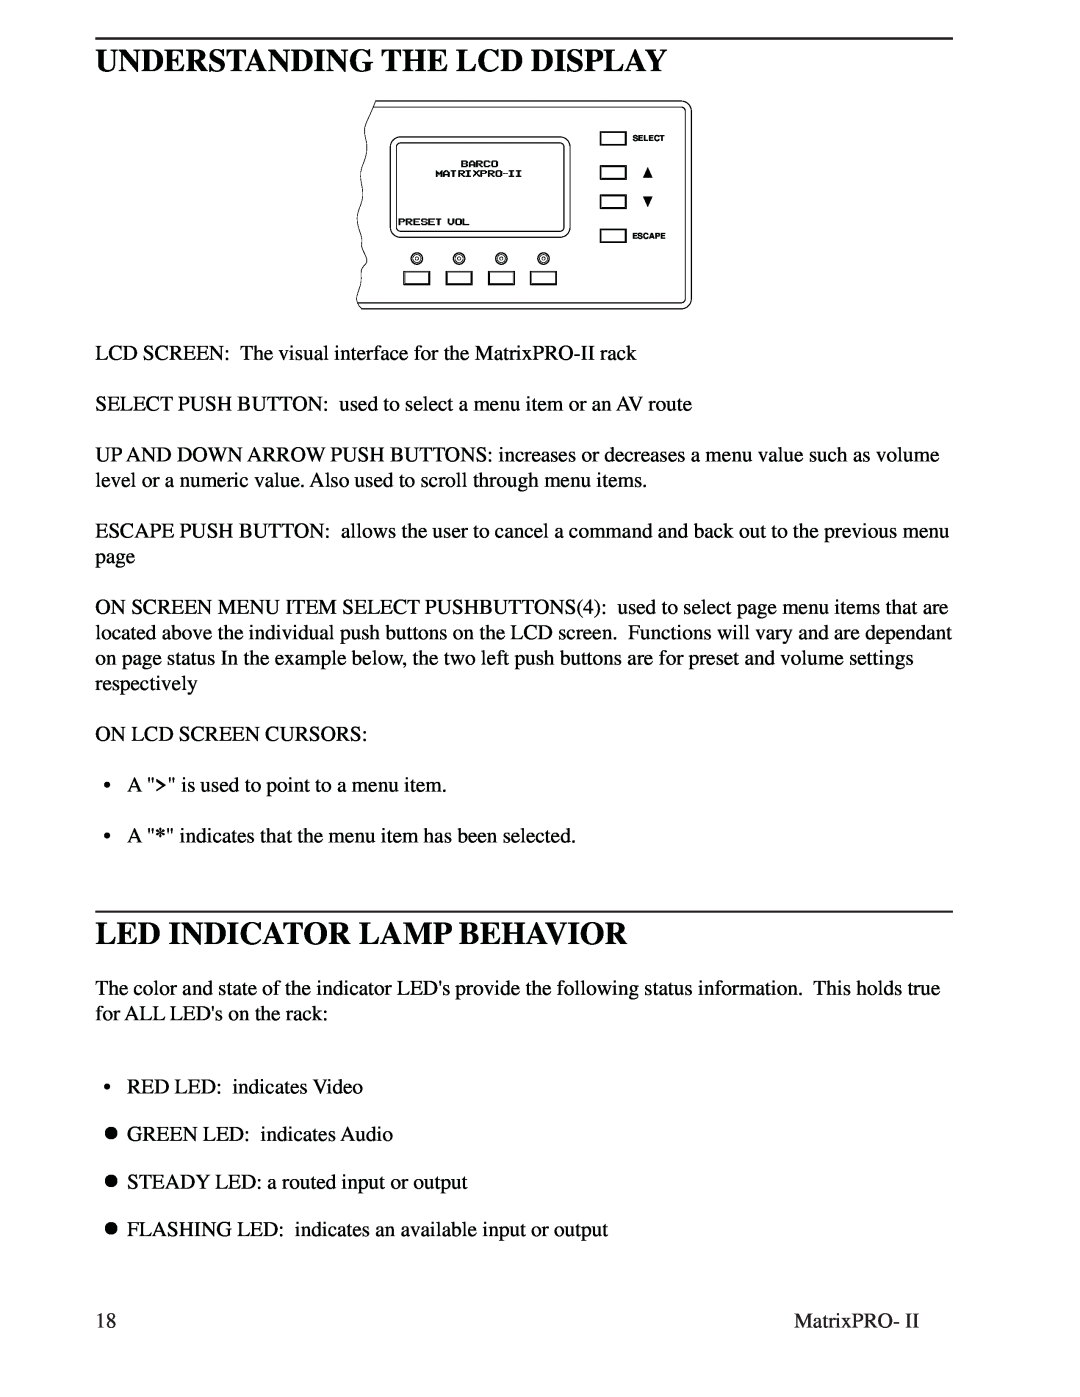 Barco 12X8, 32X32, matrixpro-II 12x8 manual Understanding The Lcd Display, Led Indicator Lamp Behavior 